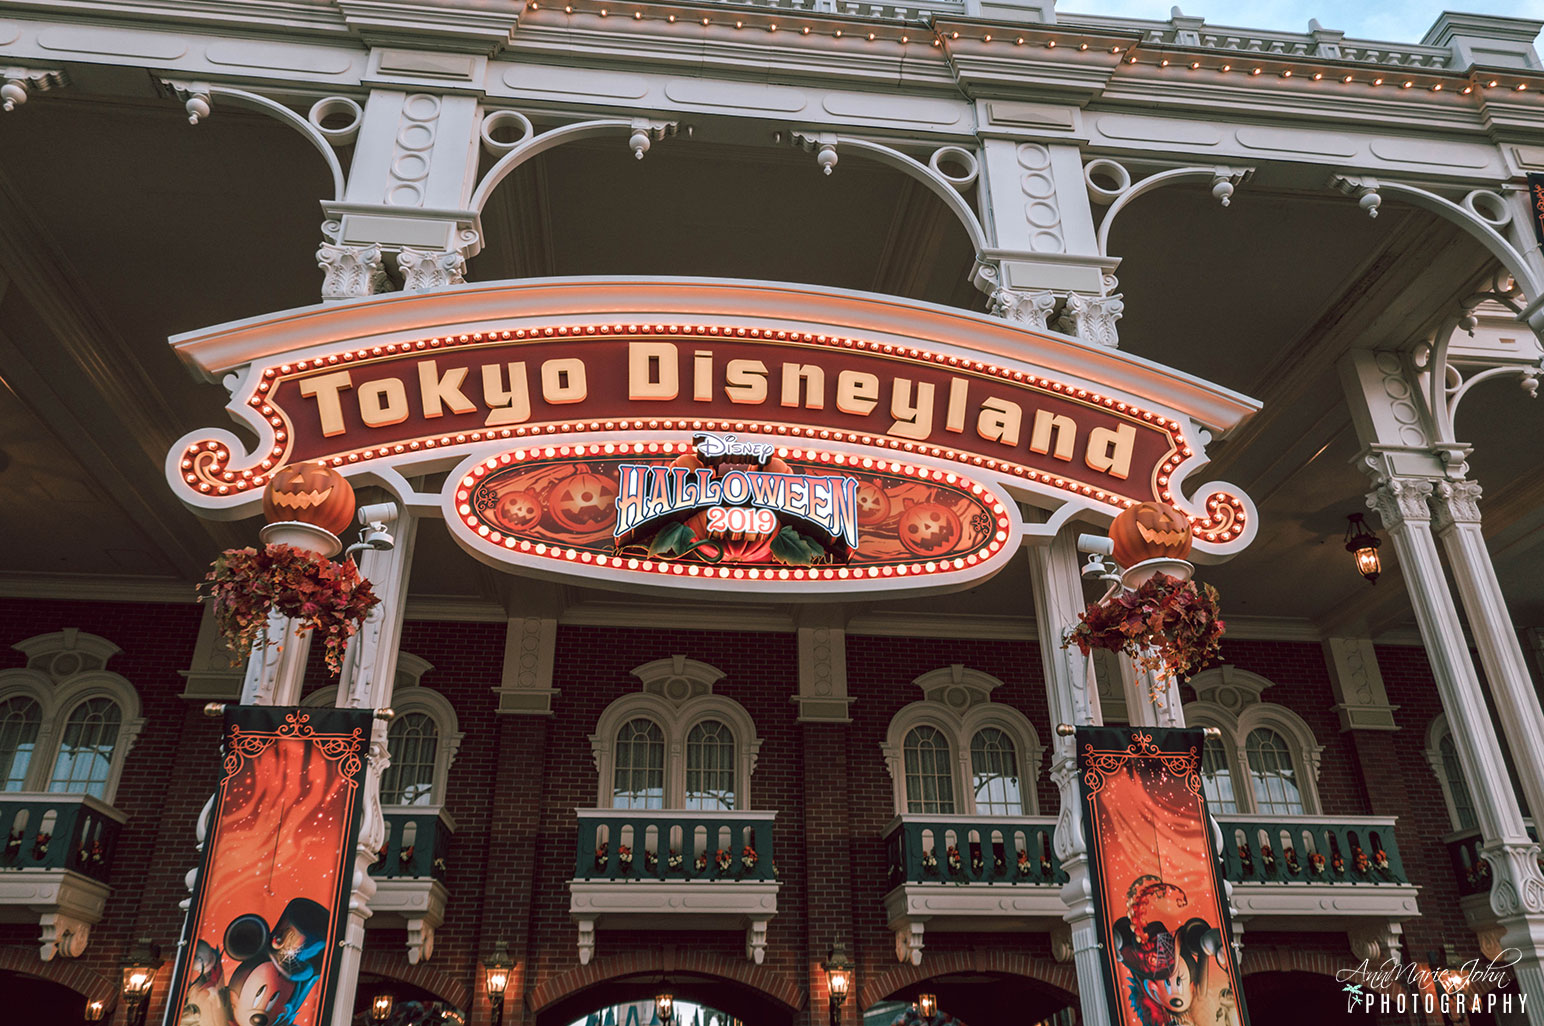 How To Plan An Awesome Trip To Tokyo Disneyland ~ #Disney #VisitJapan